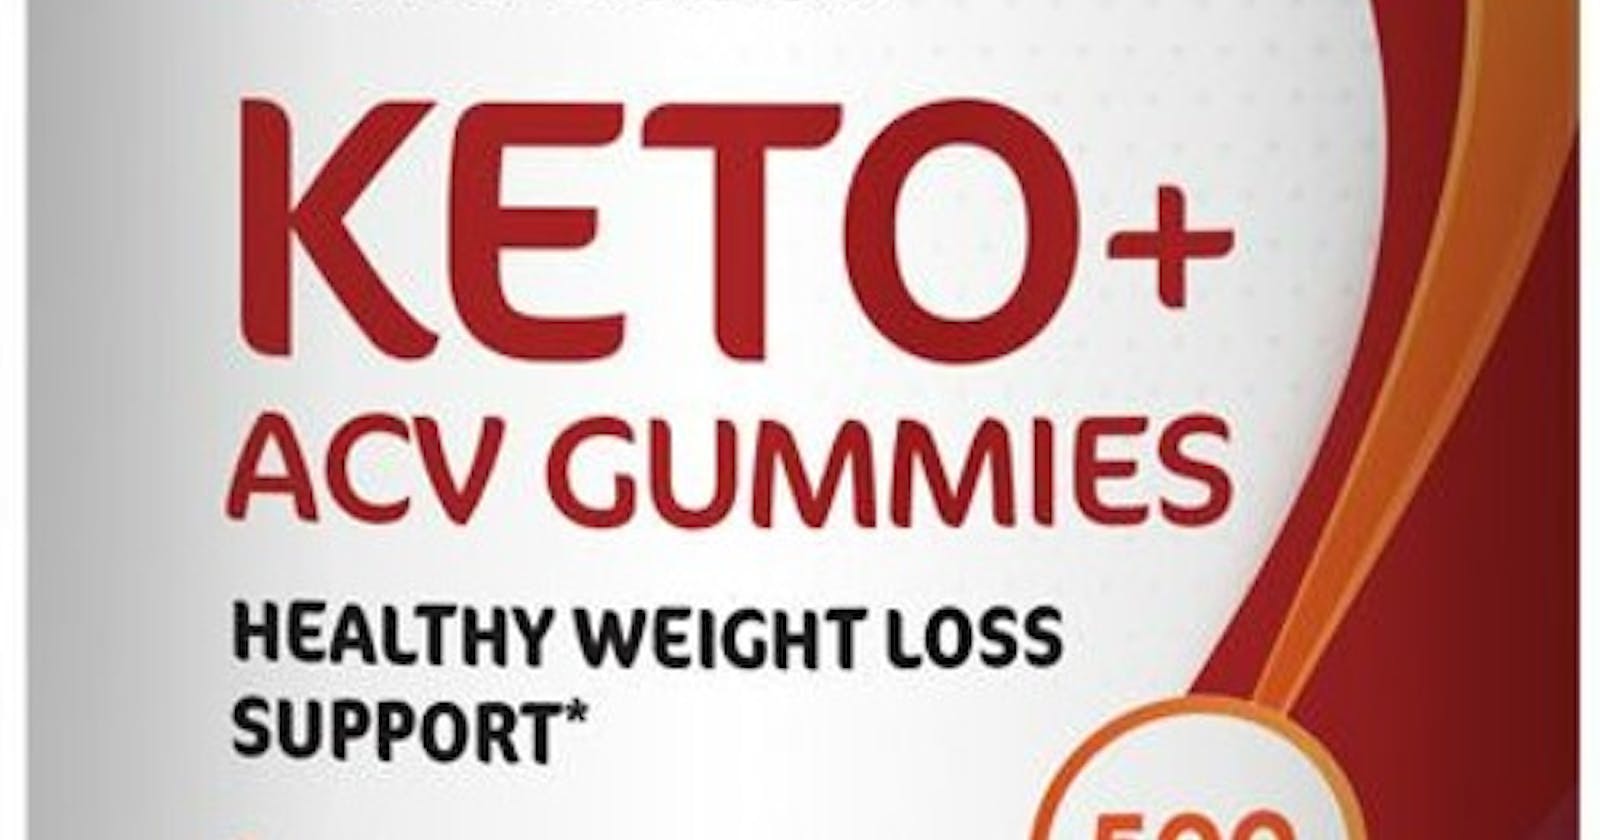 Life Boost Keto ACV Gummies : Read Pros, Cons, Scam & Legitimate Reviews!